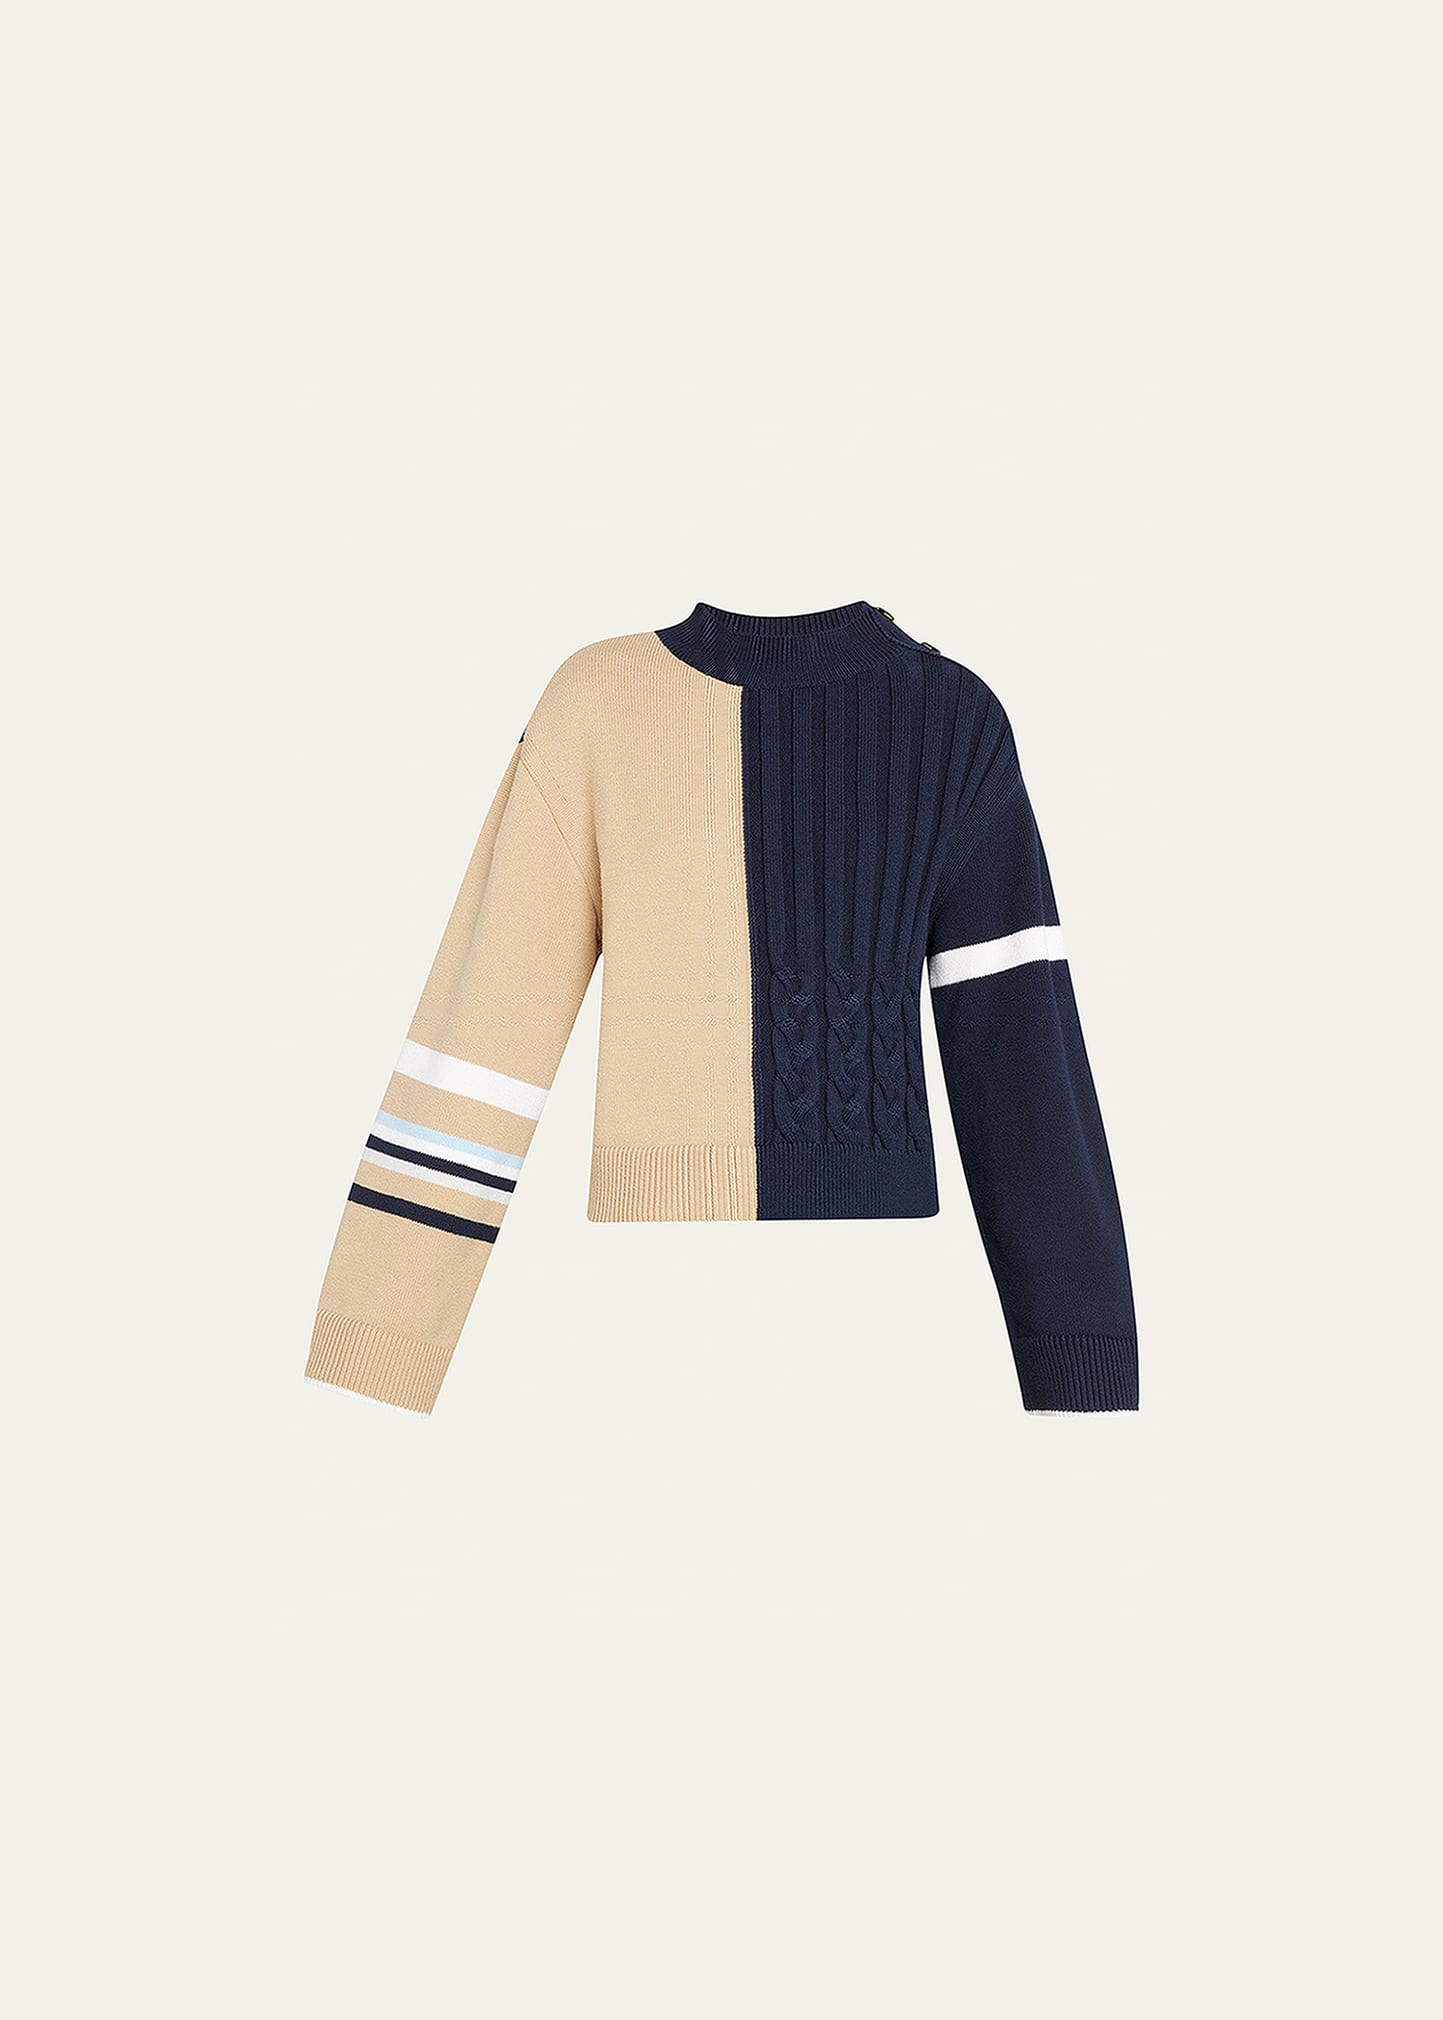 ADEAM Rothko Splice Colorblock Sweater